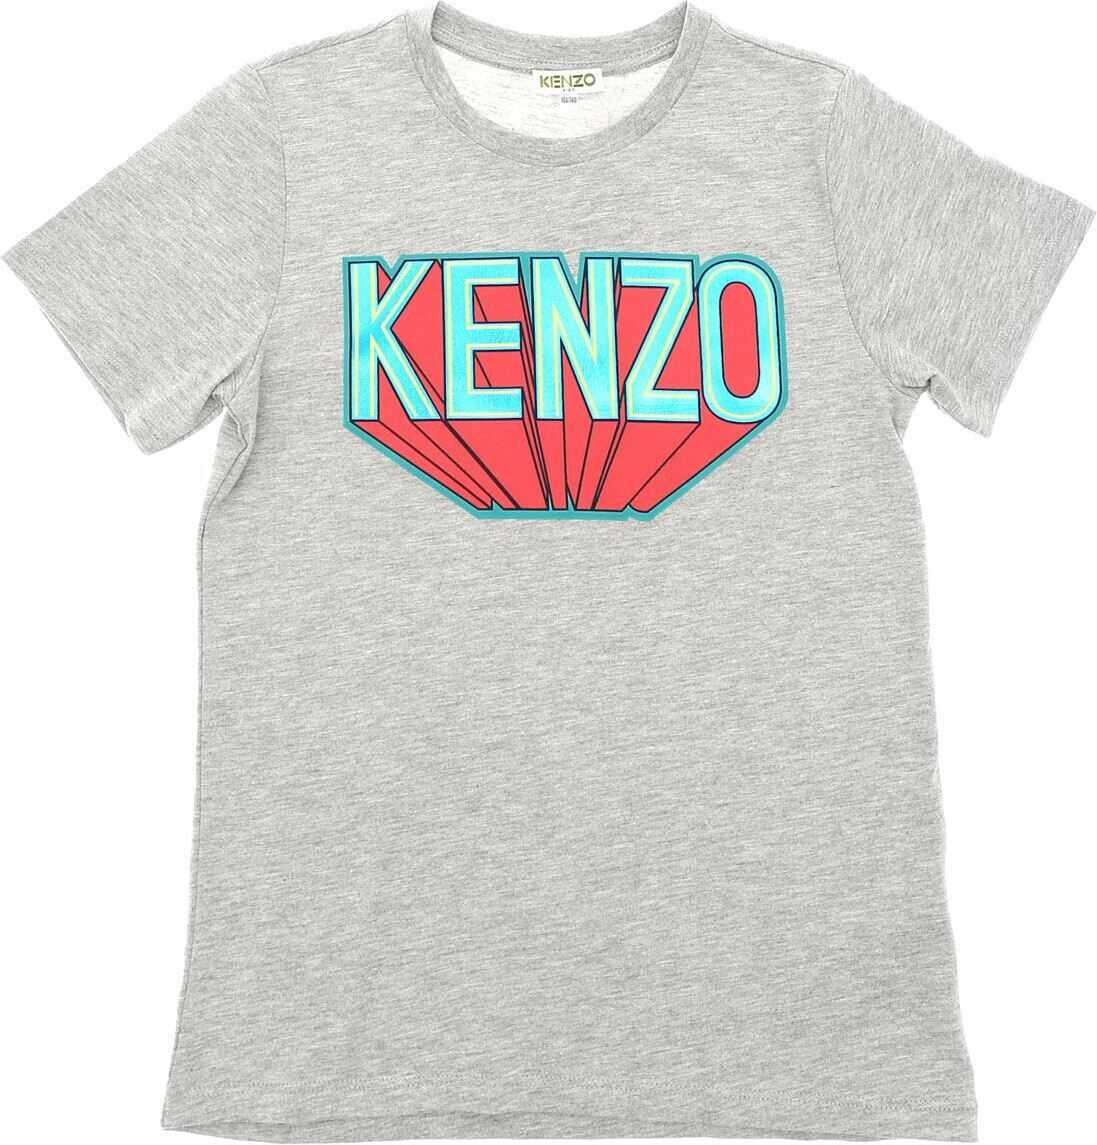 Kenzo Super Kenzo T-Shirt In Gray With Logo Gray